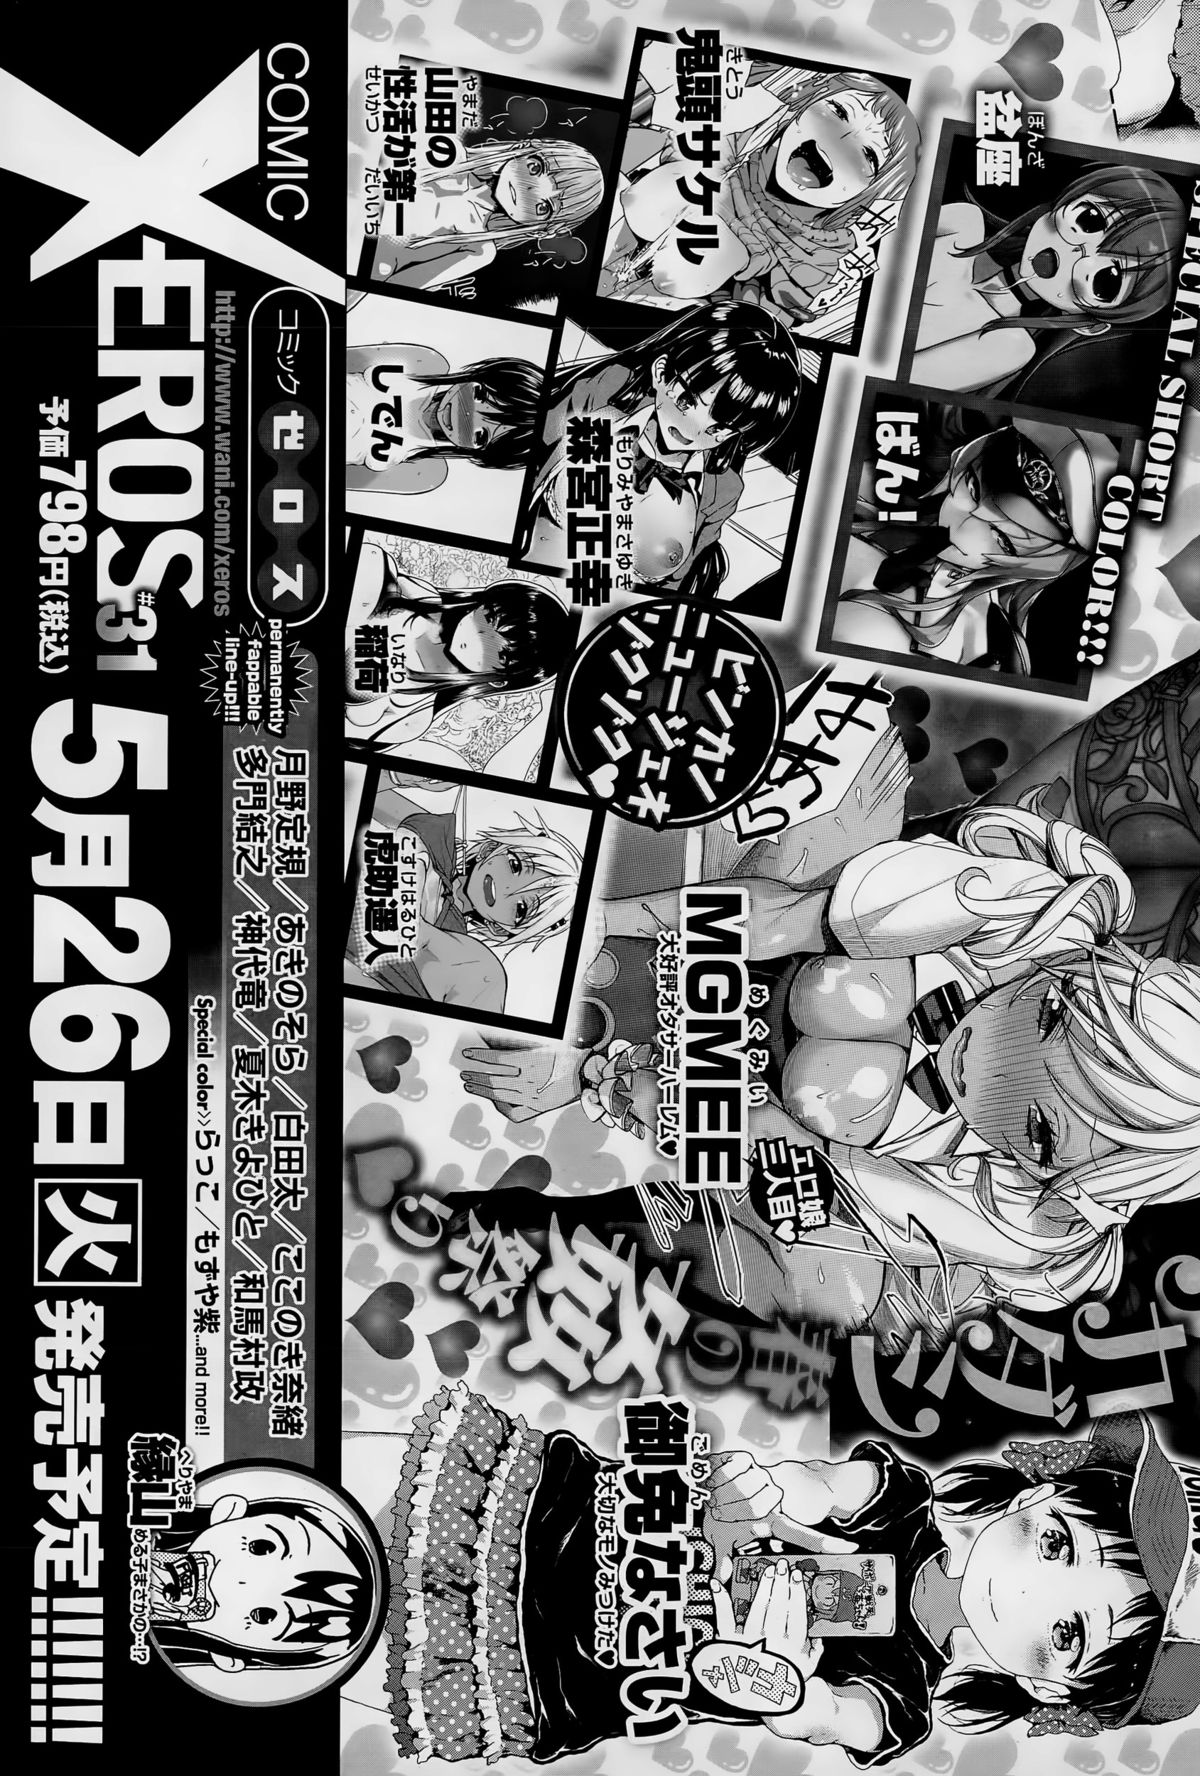 COMIC X-EROS（ゼロス） ＃30 COMIC快楽天 2015年6月号増刊